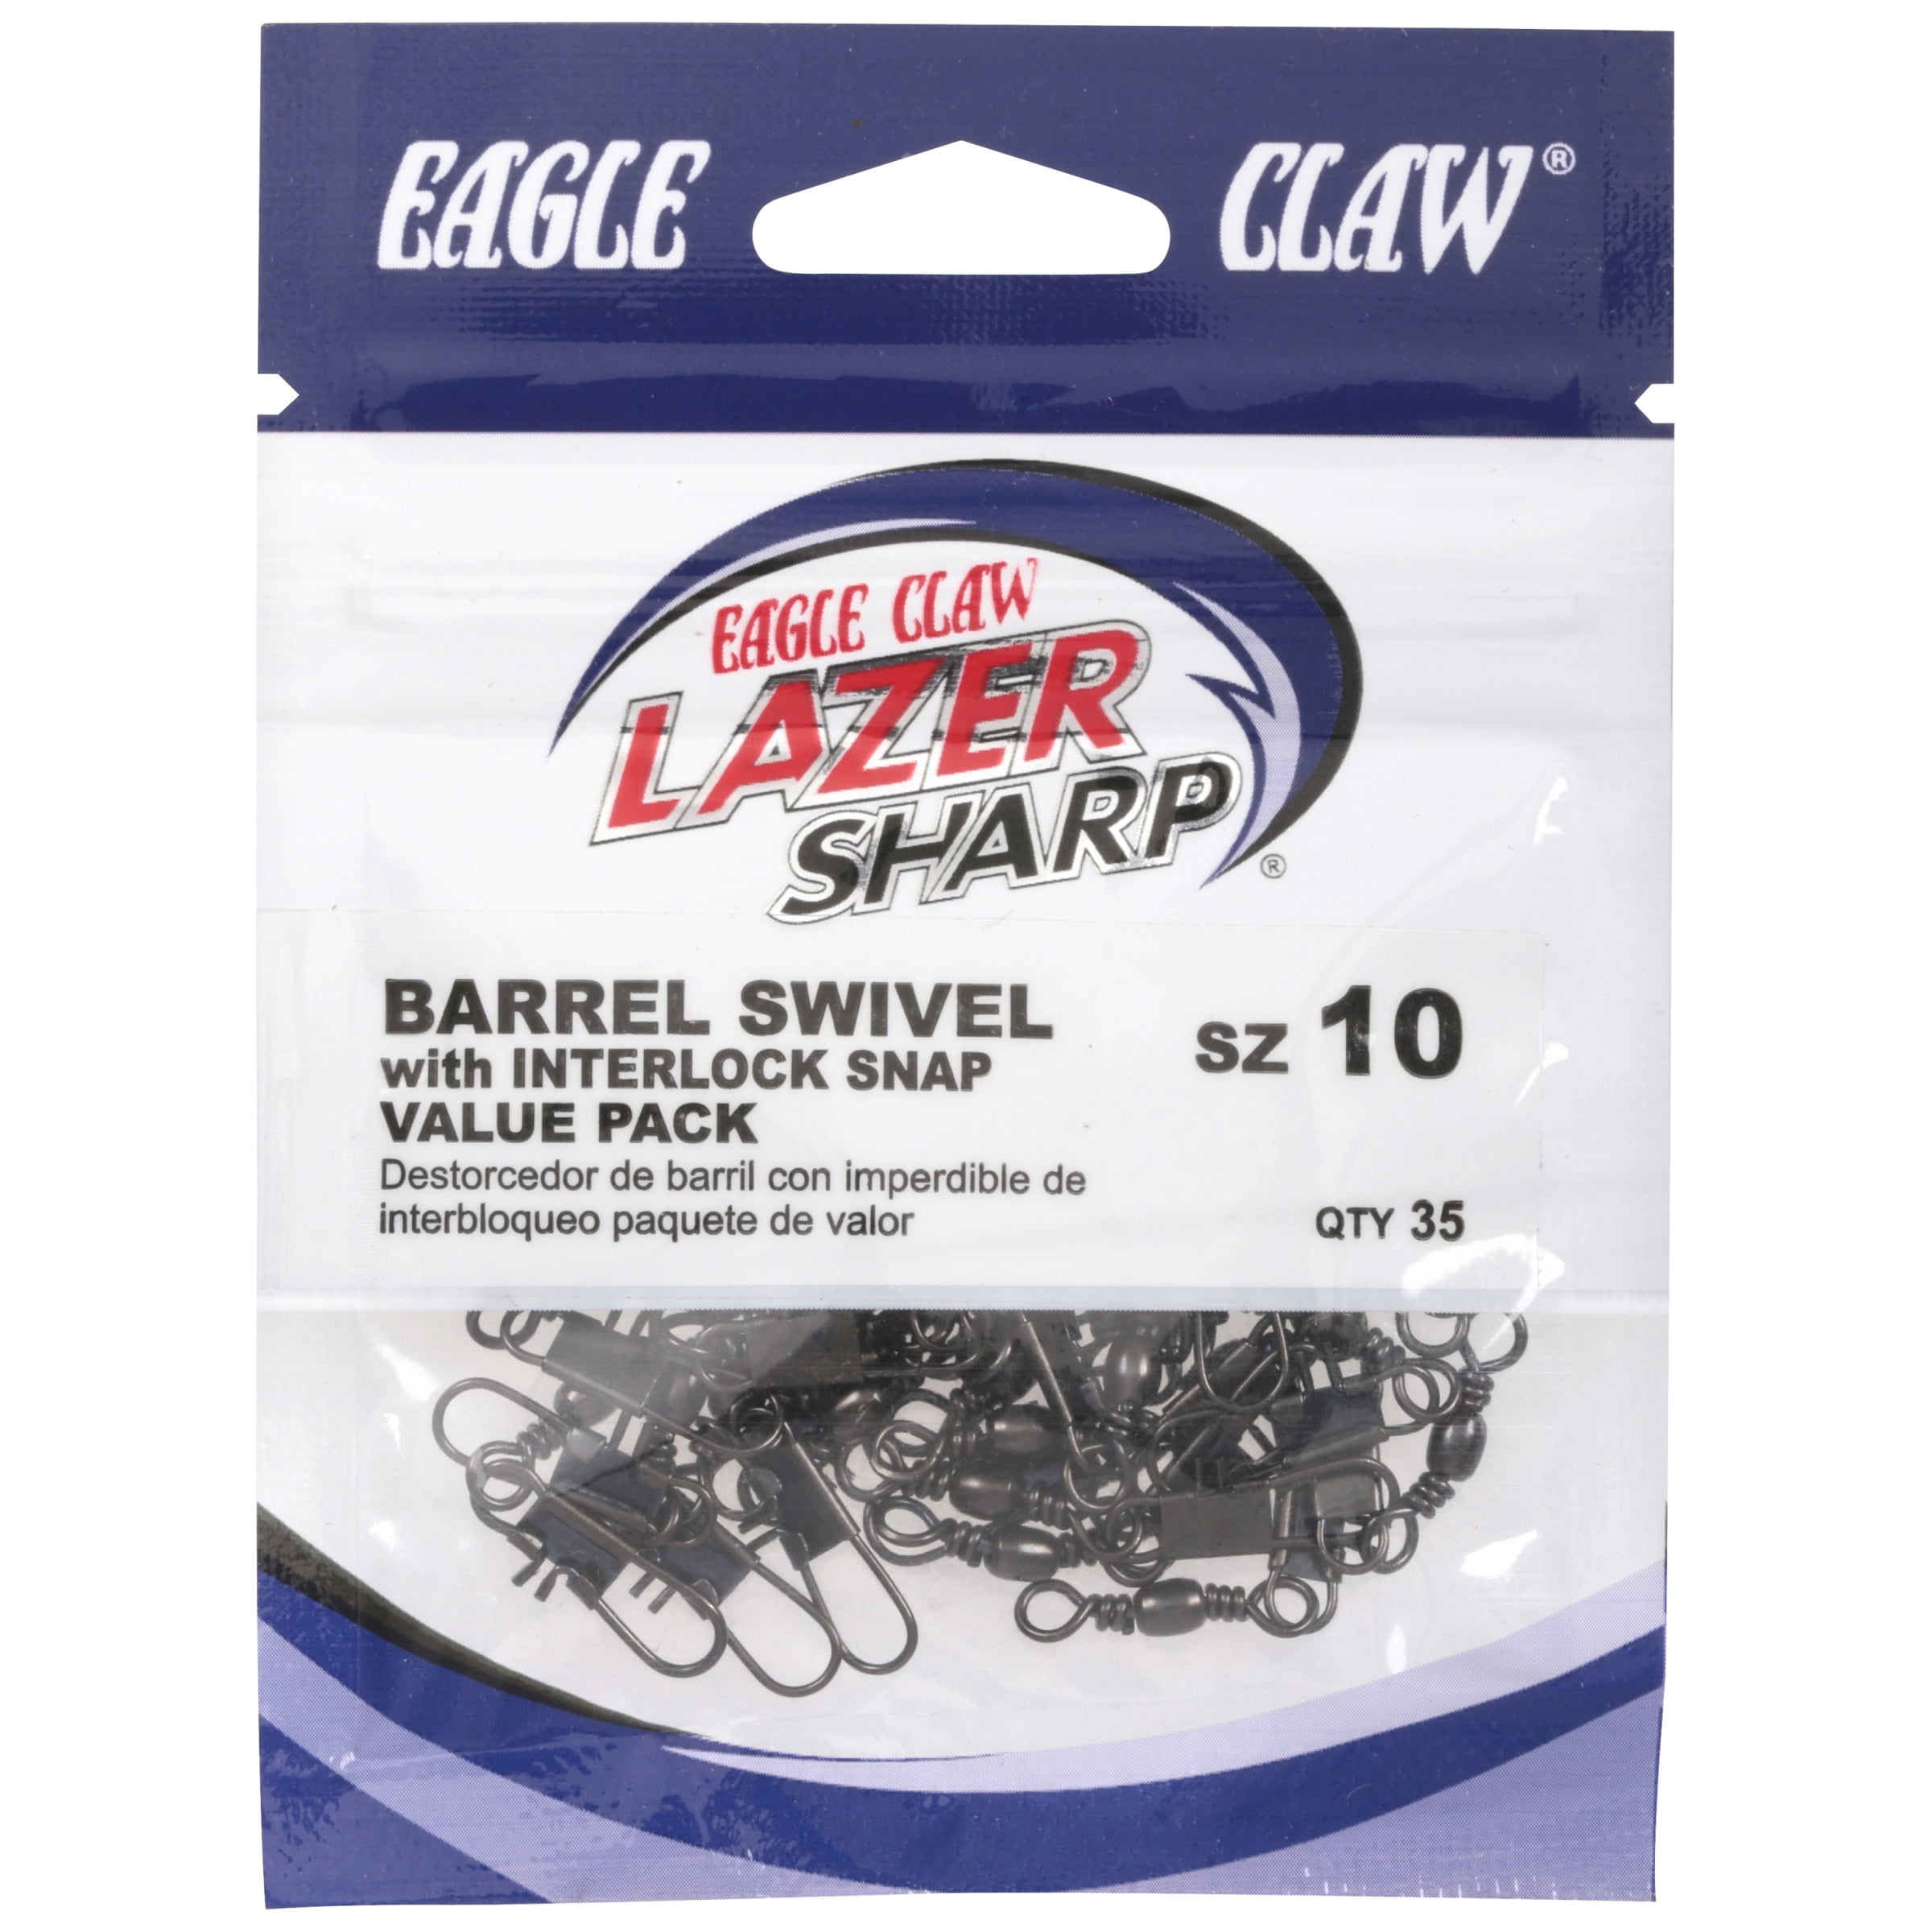 Black Eagle Claw Barrel Swivel Size 10 12 Pack 